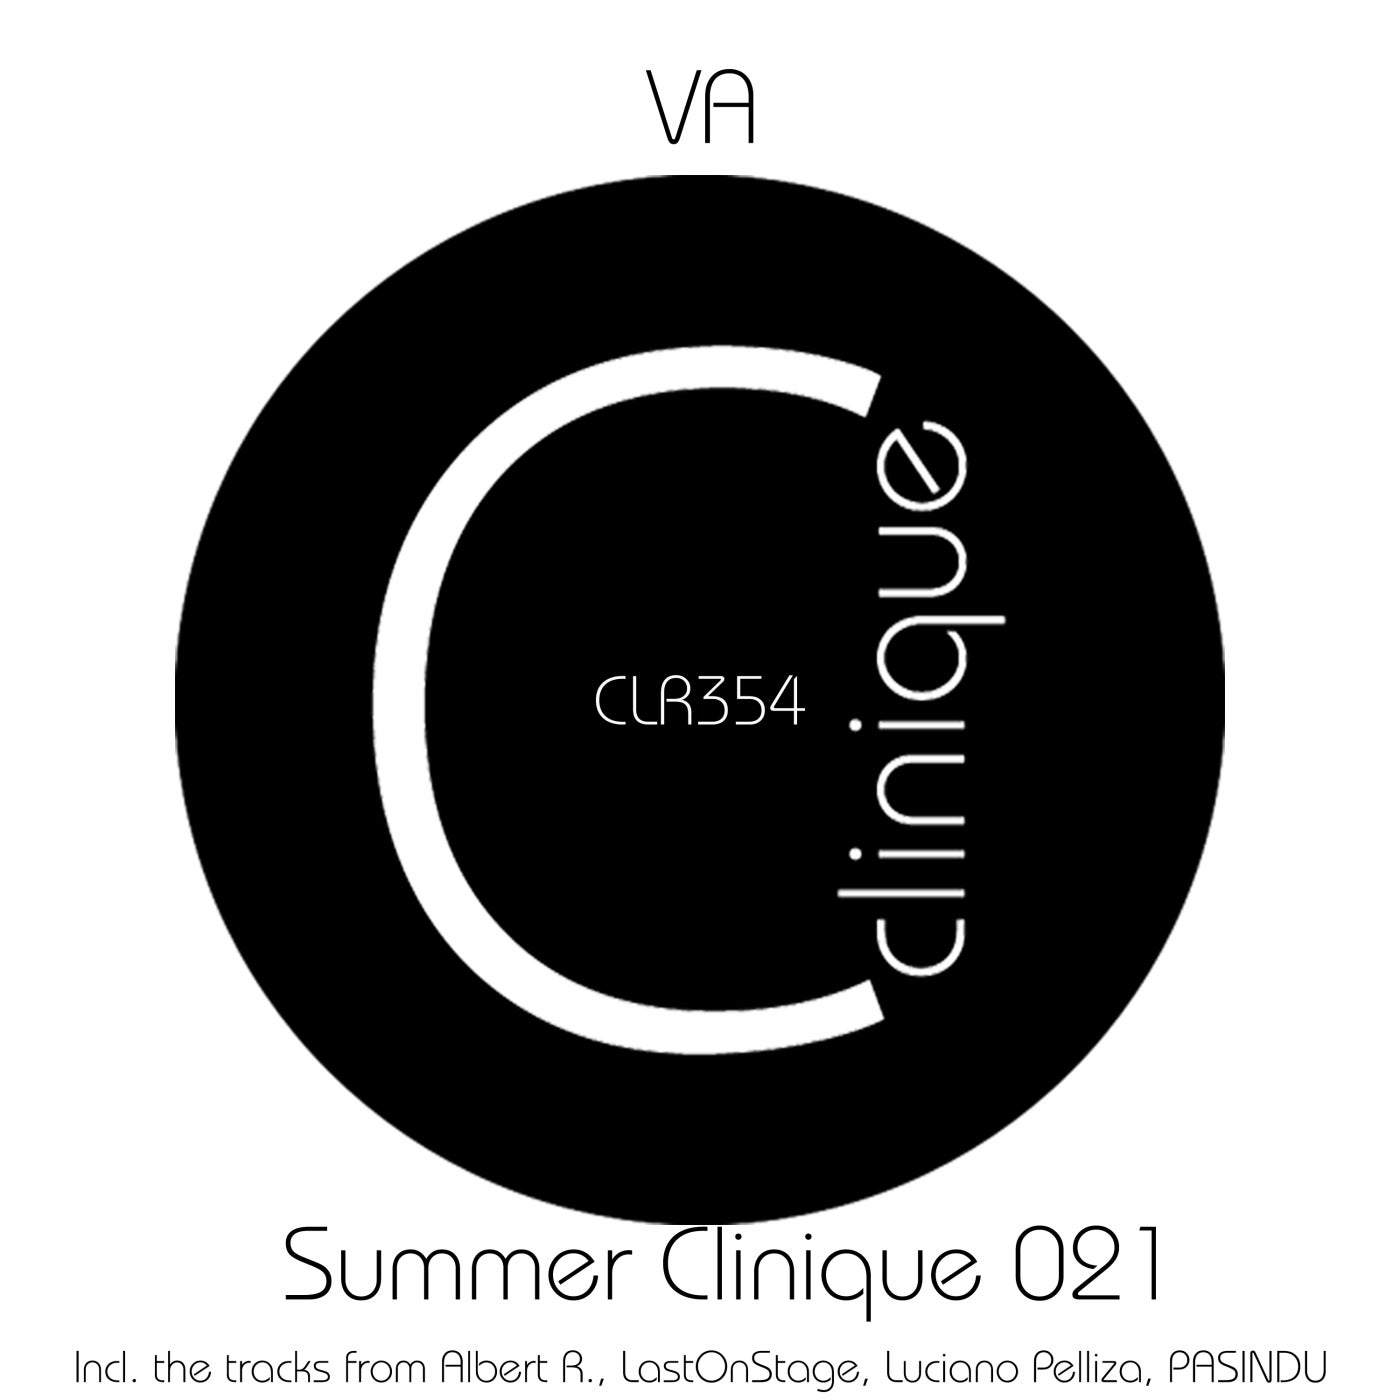 Summer Clinique 021